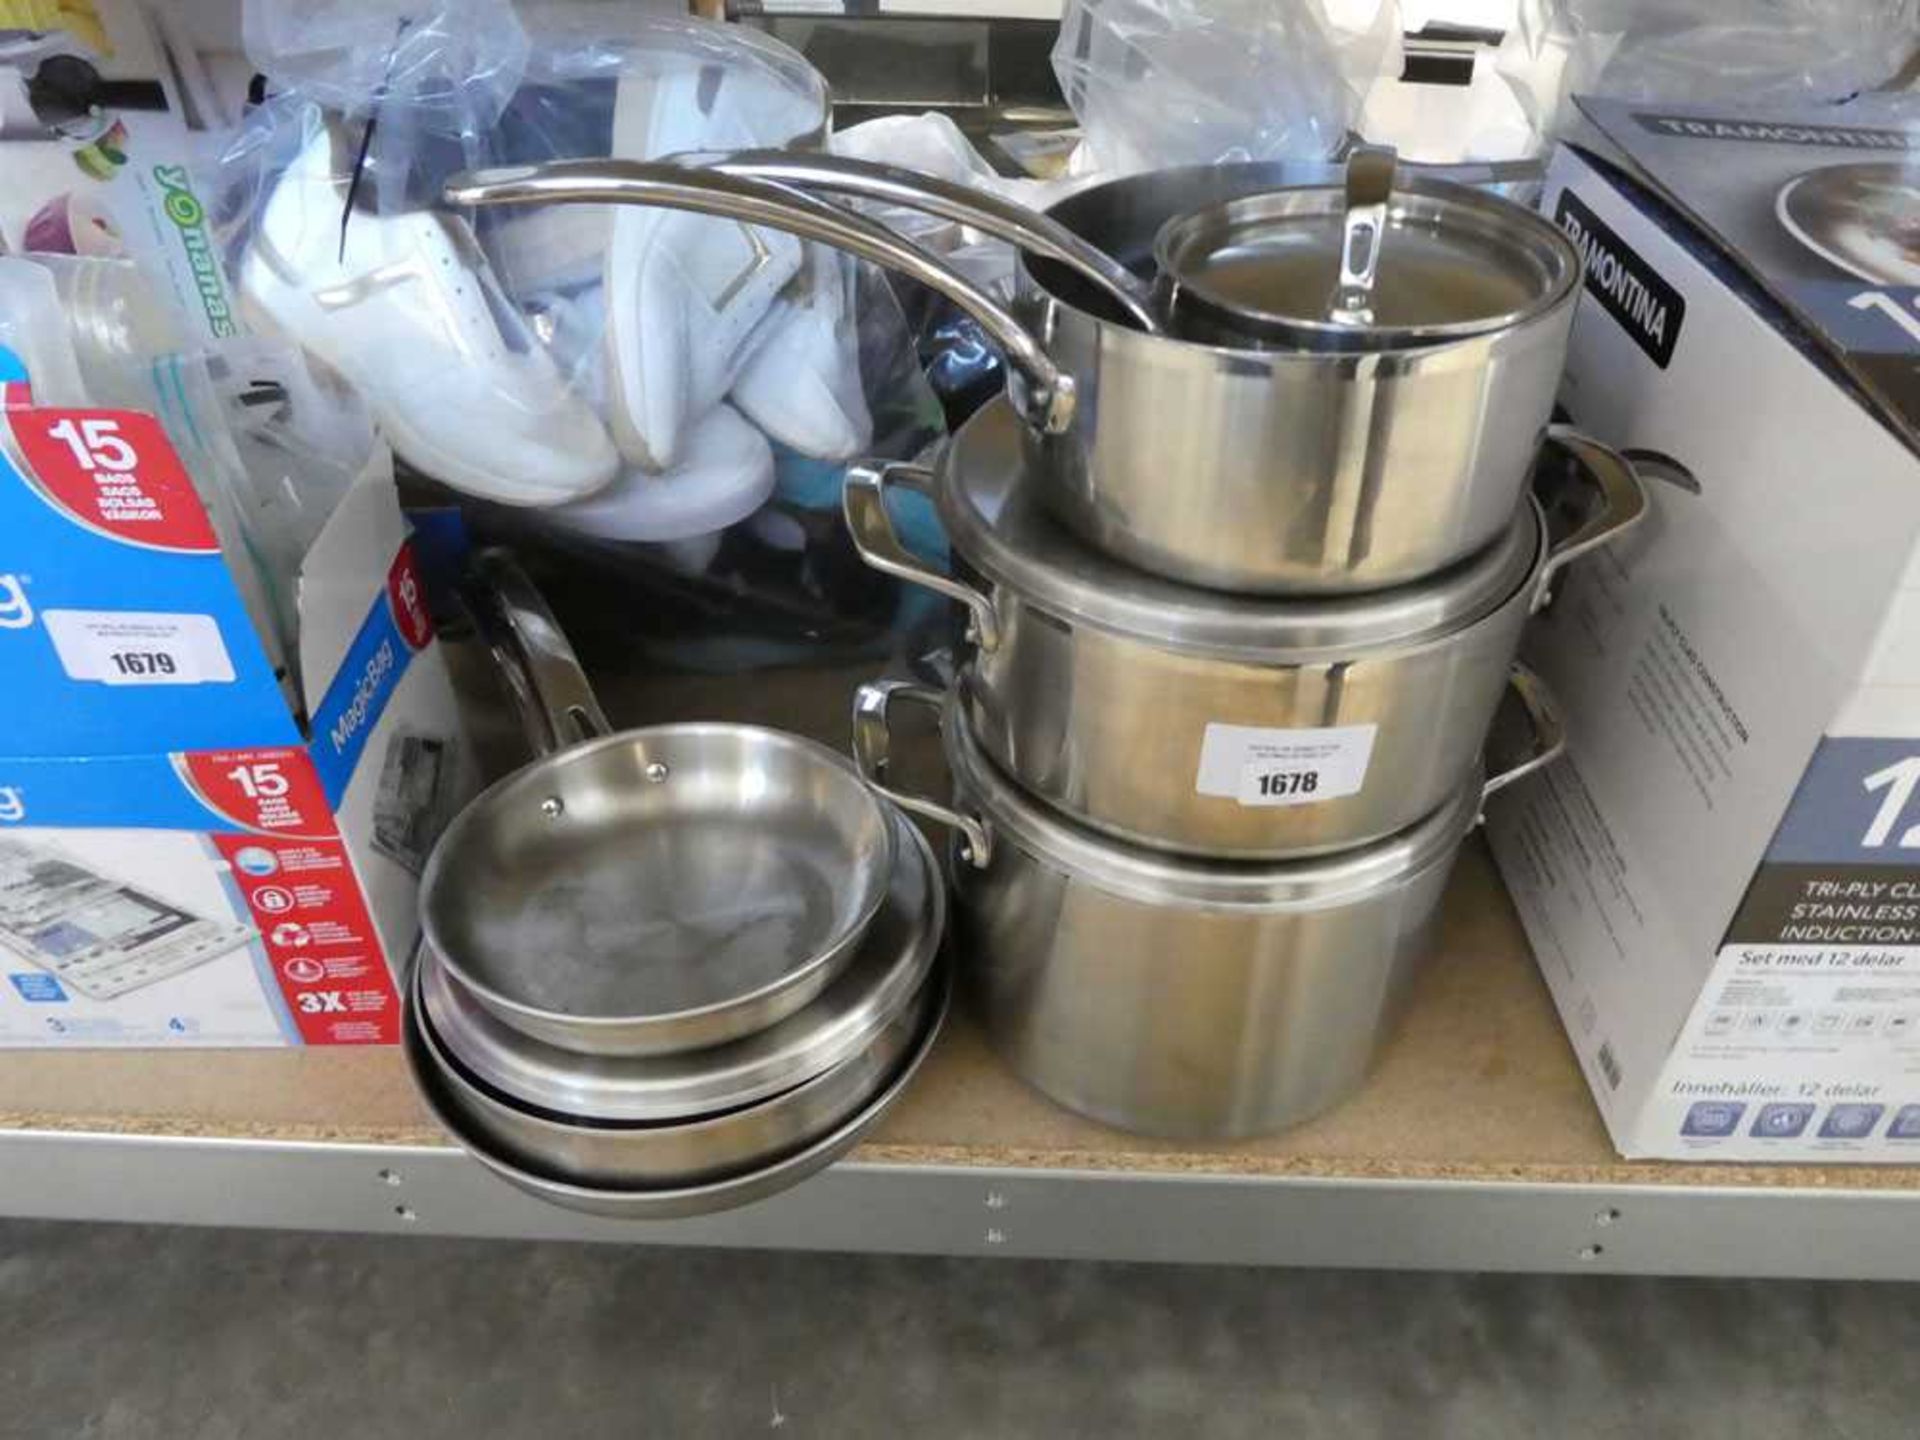 +VAT Unboxed set of Tramontina pots and pans